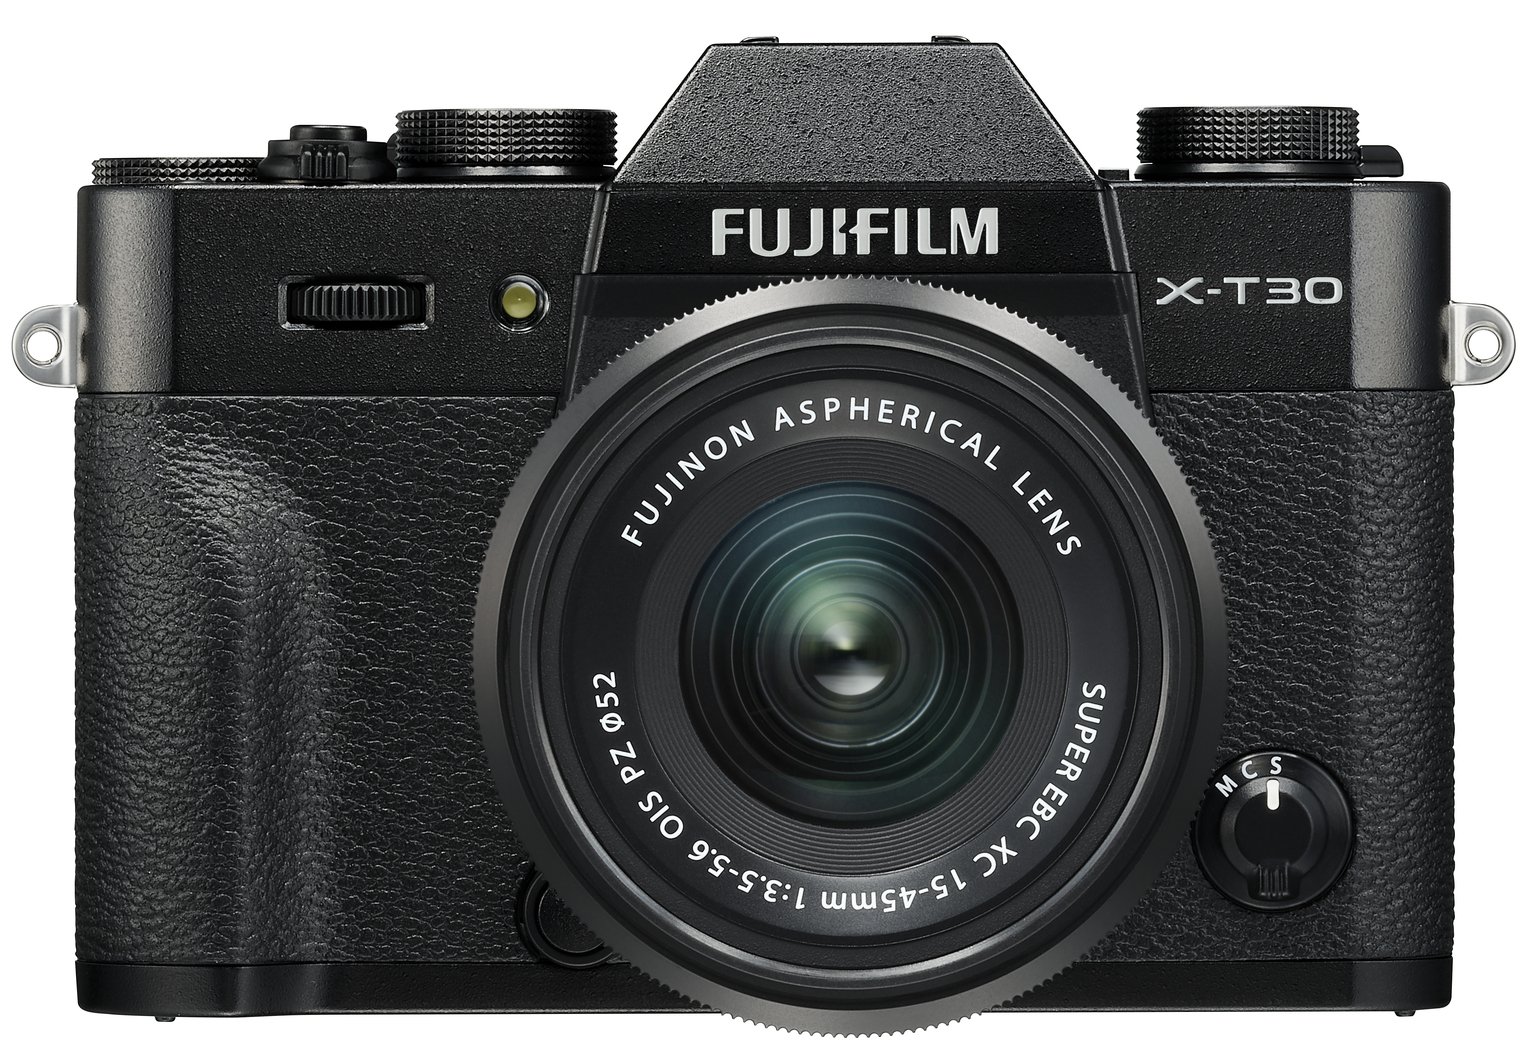 Fujifilm X-T30 Digital Camera with 15-45mm Lens Review